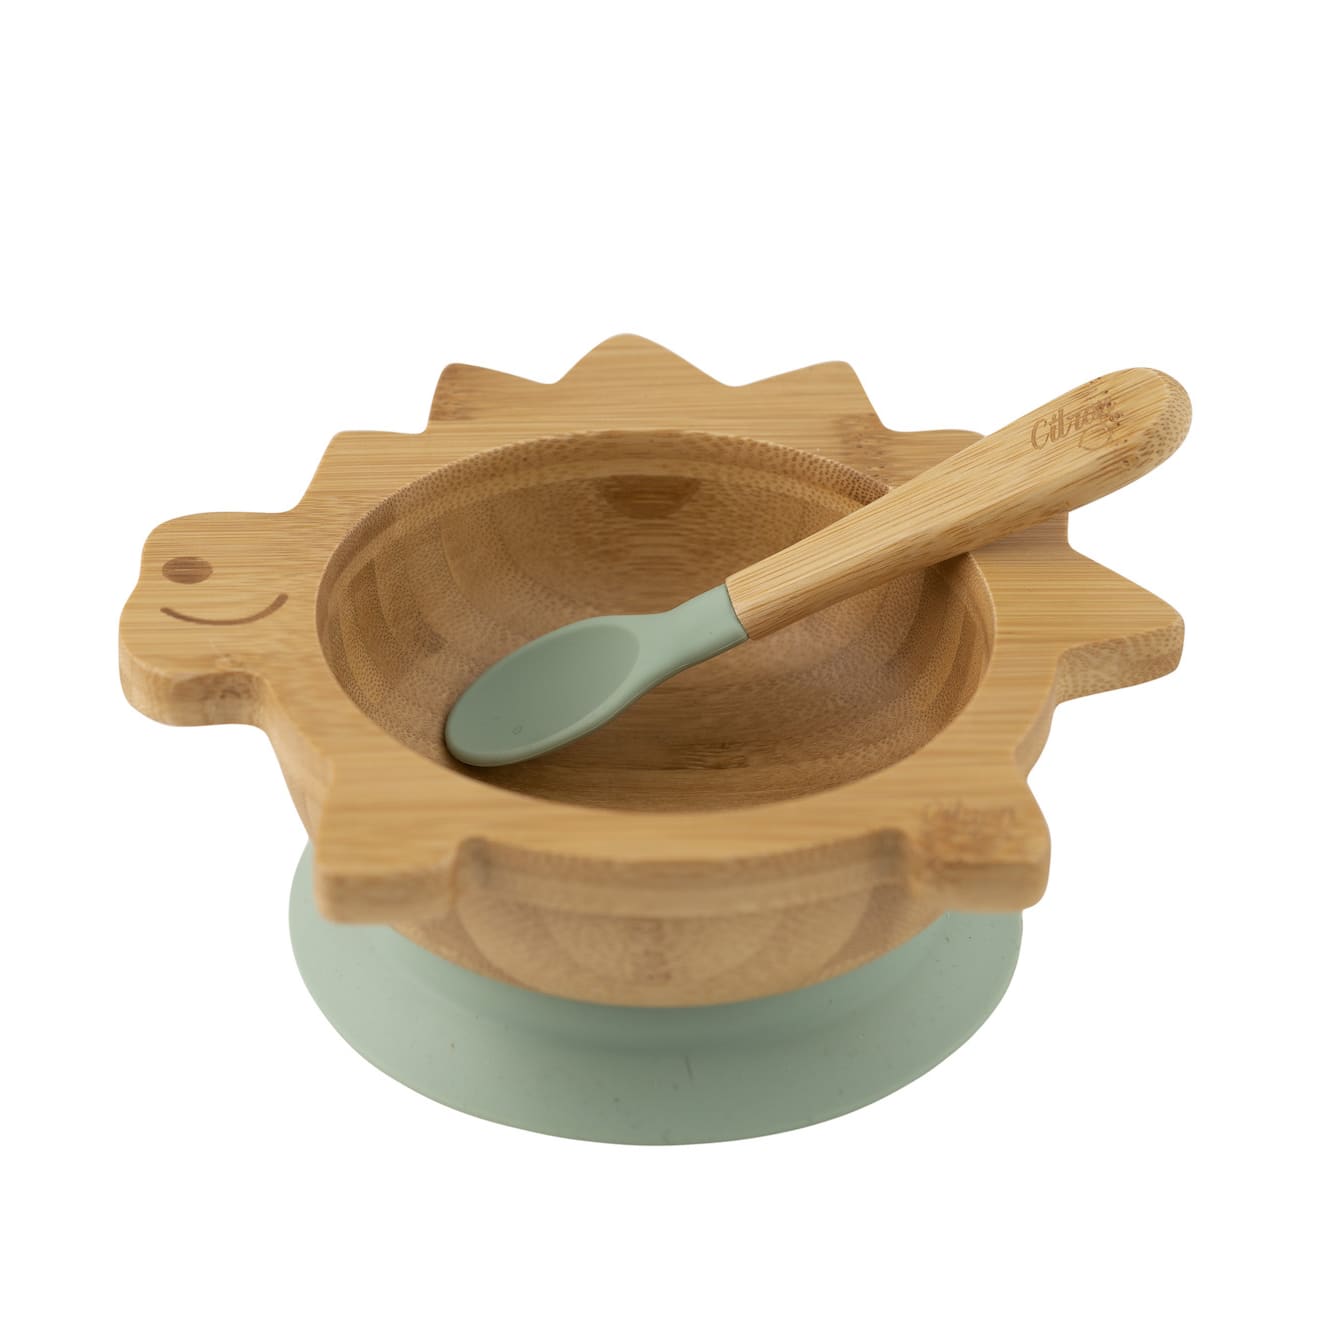 Organic Bamboo Bowl 250ml Suction + Spoon